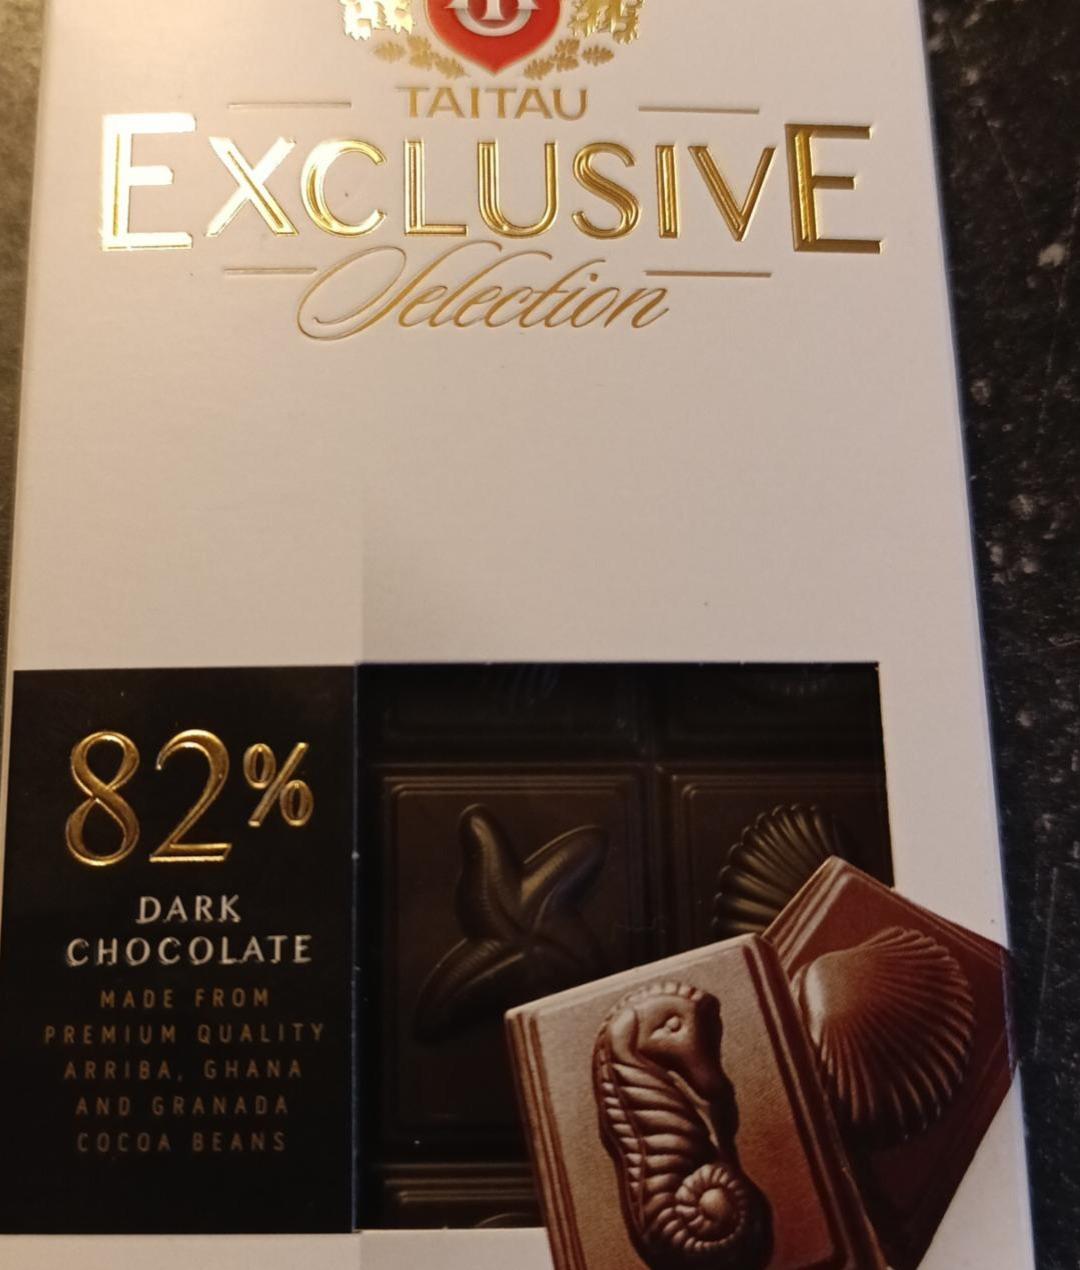 Fotografie - Exclusive selection dark chocolate 82% taitau